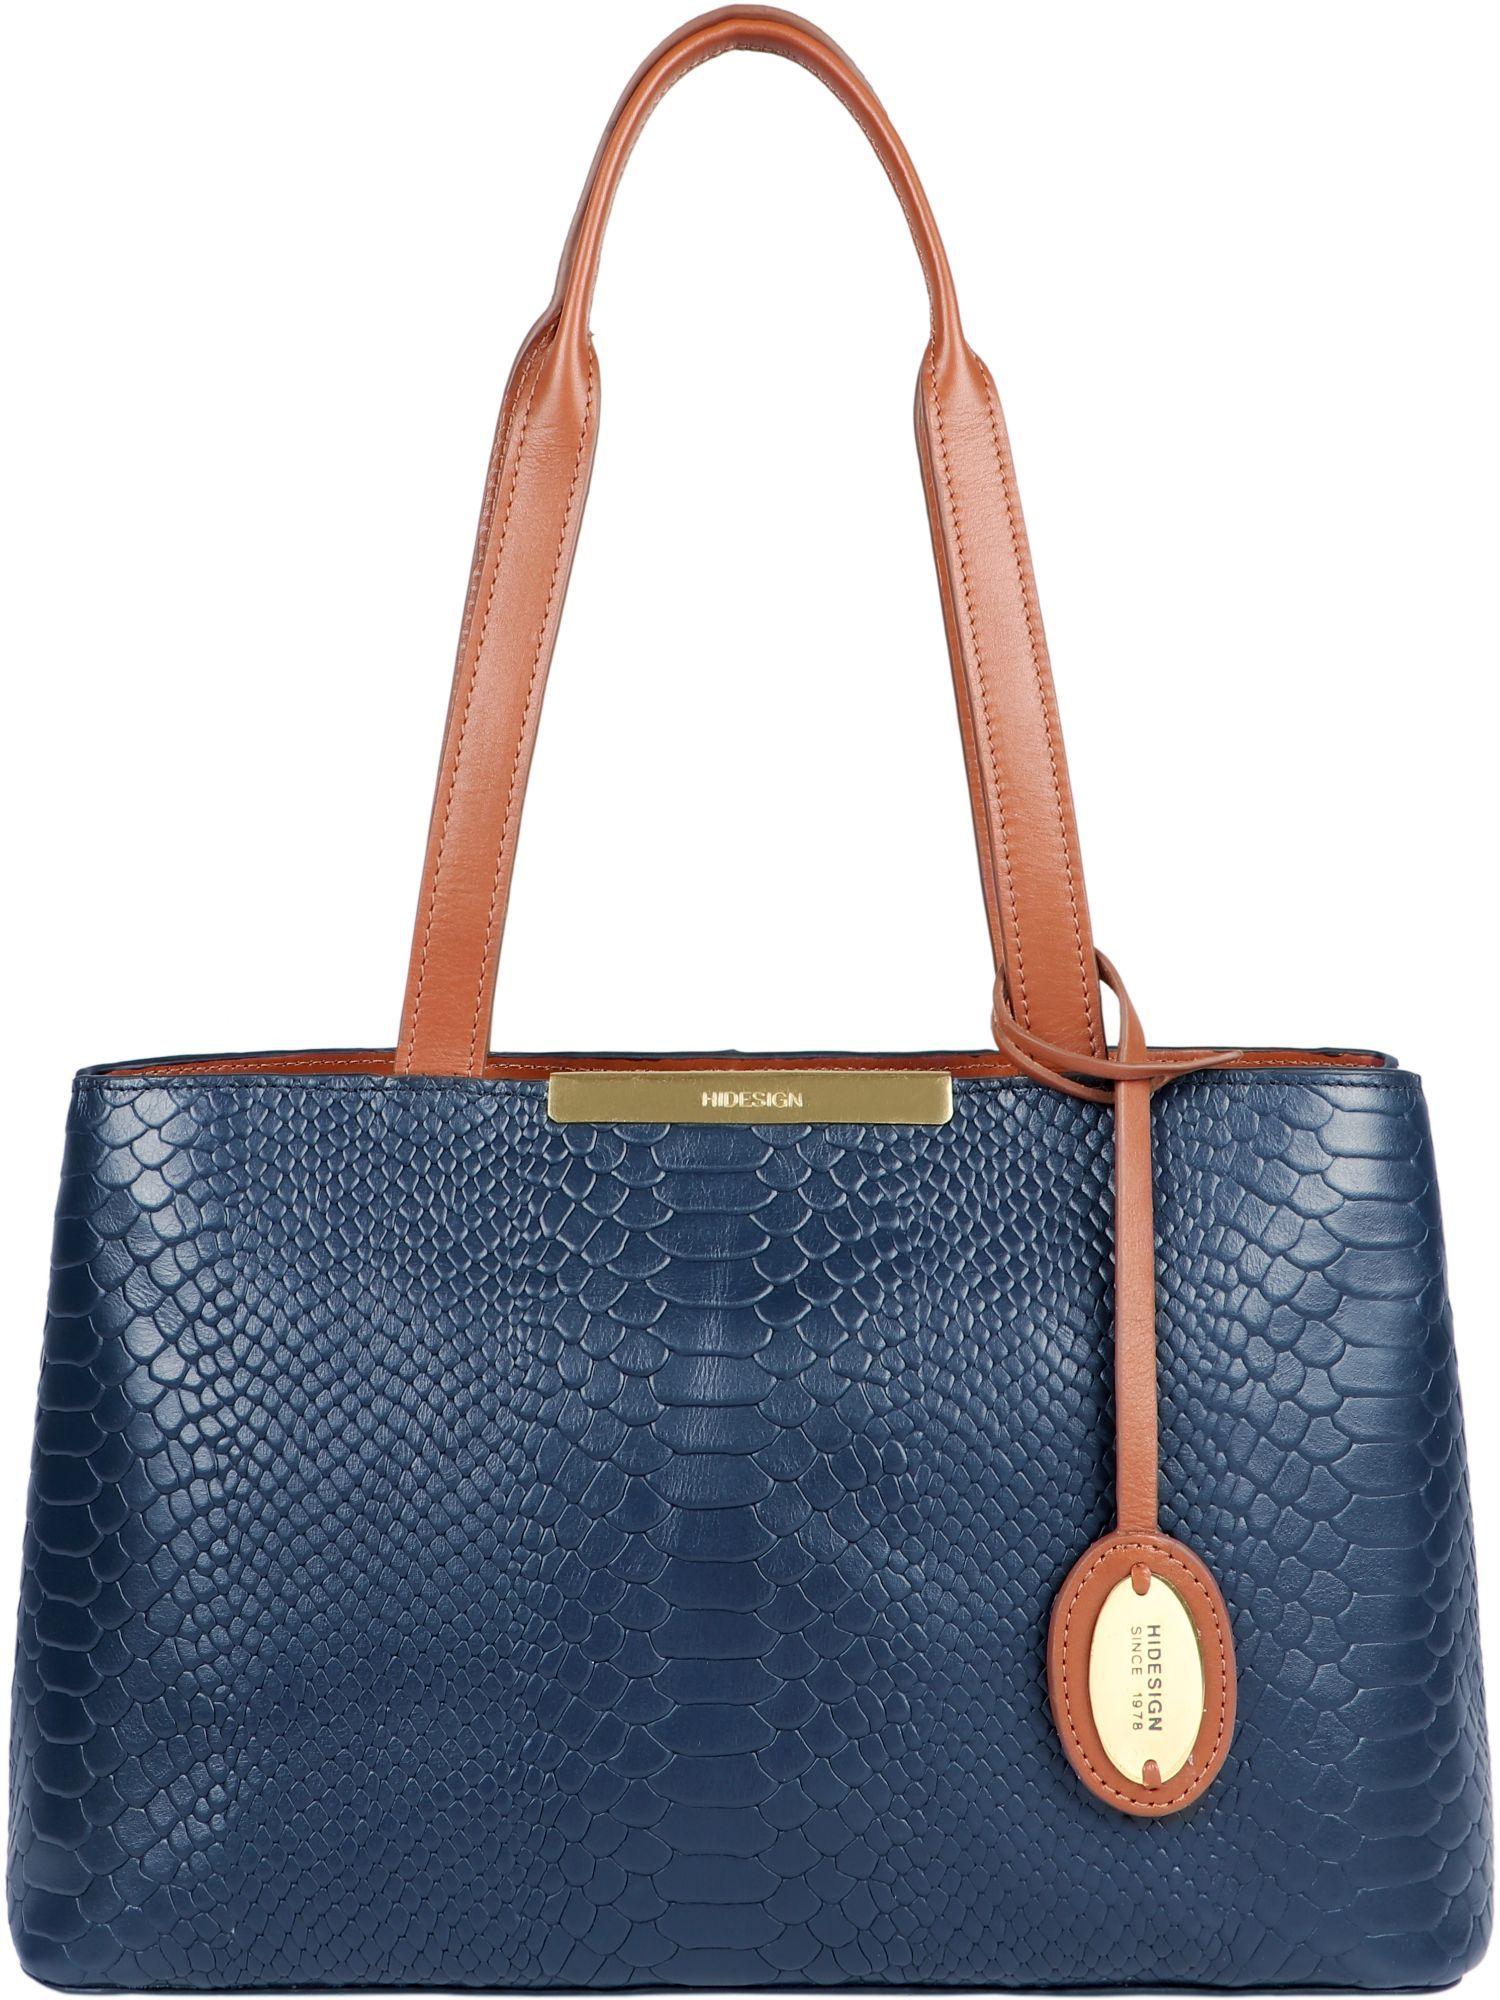 navy blue animal print handbag